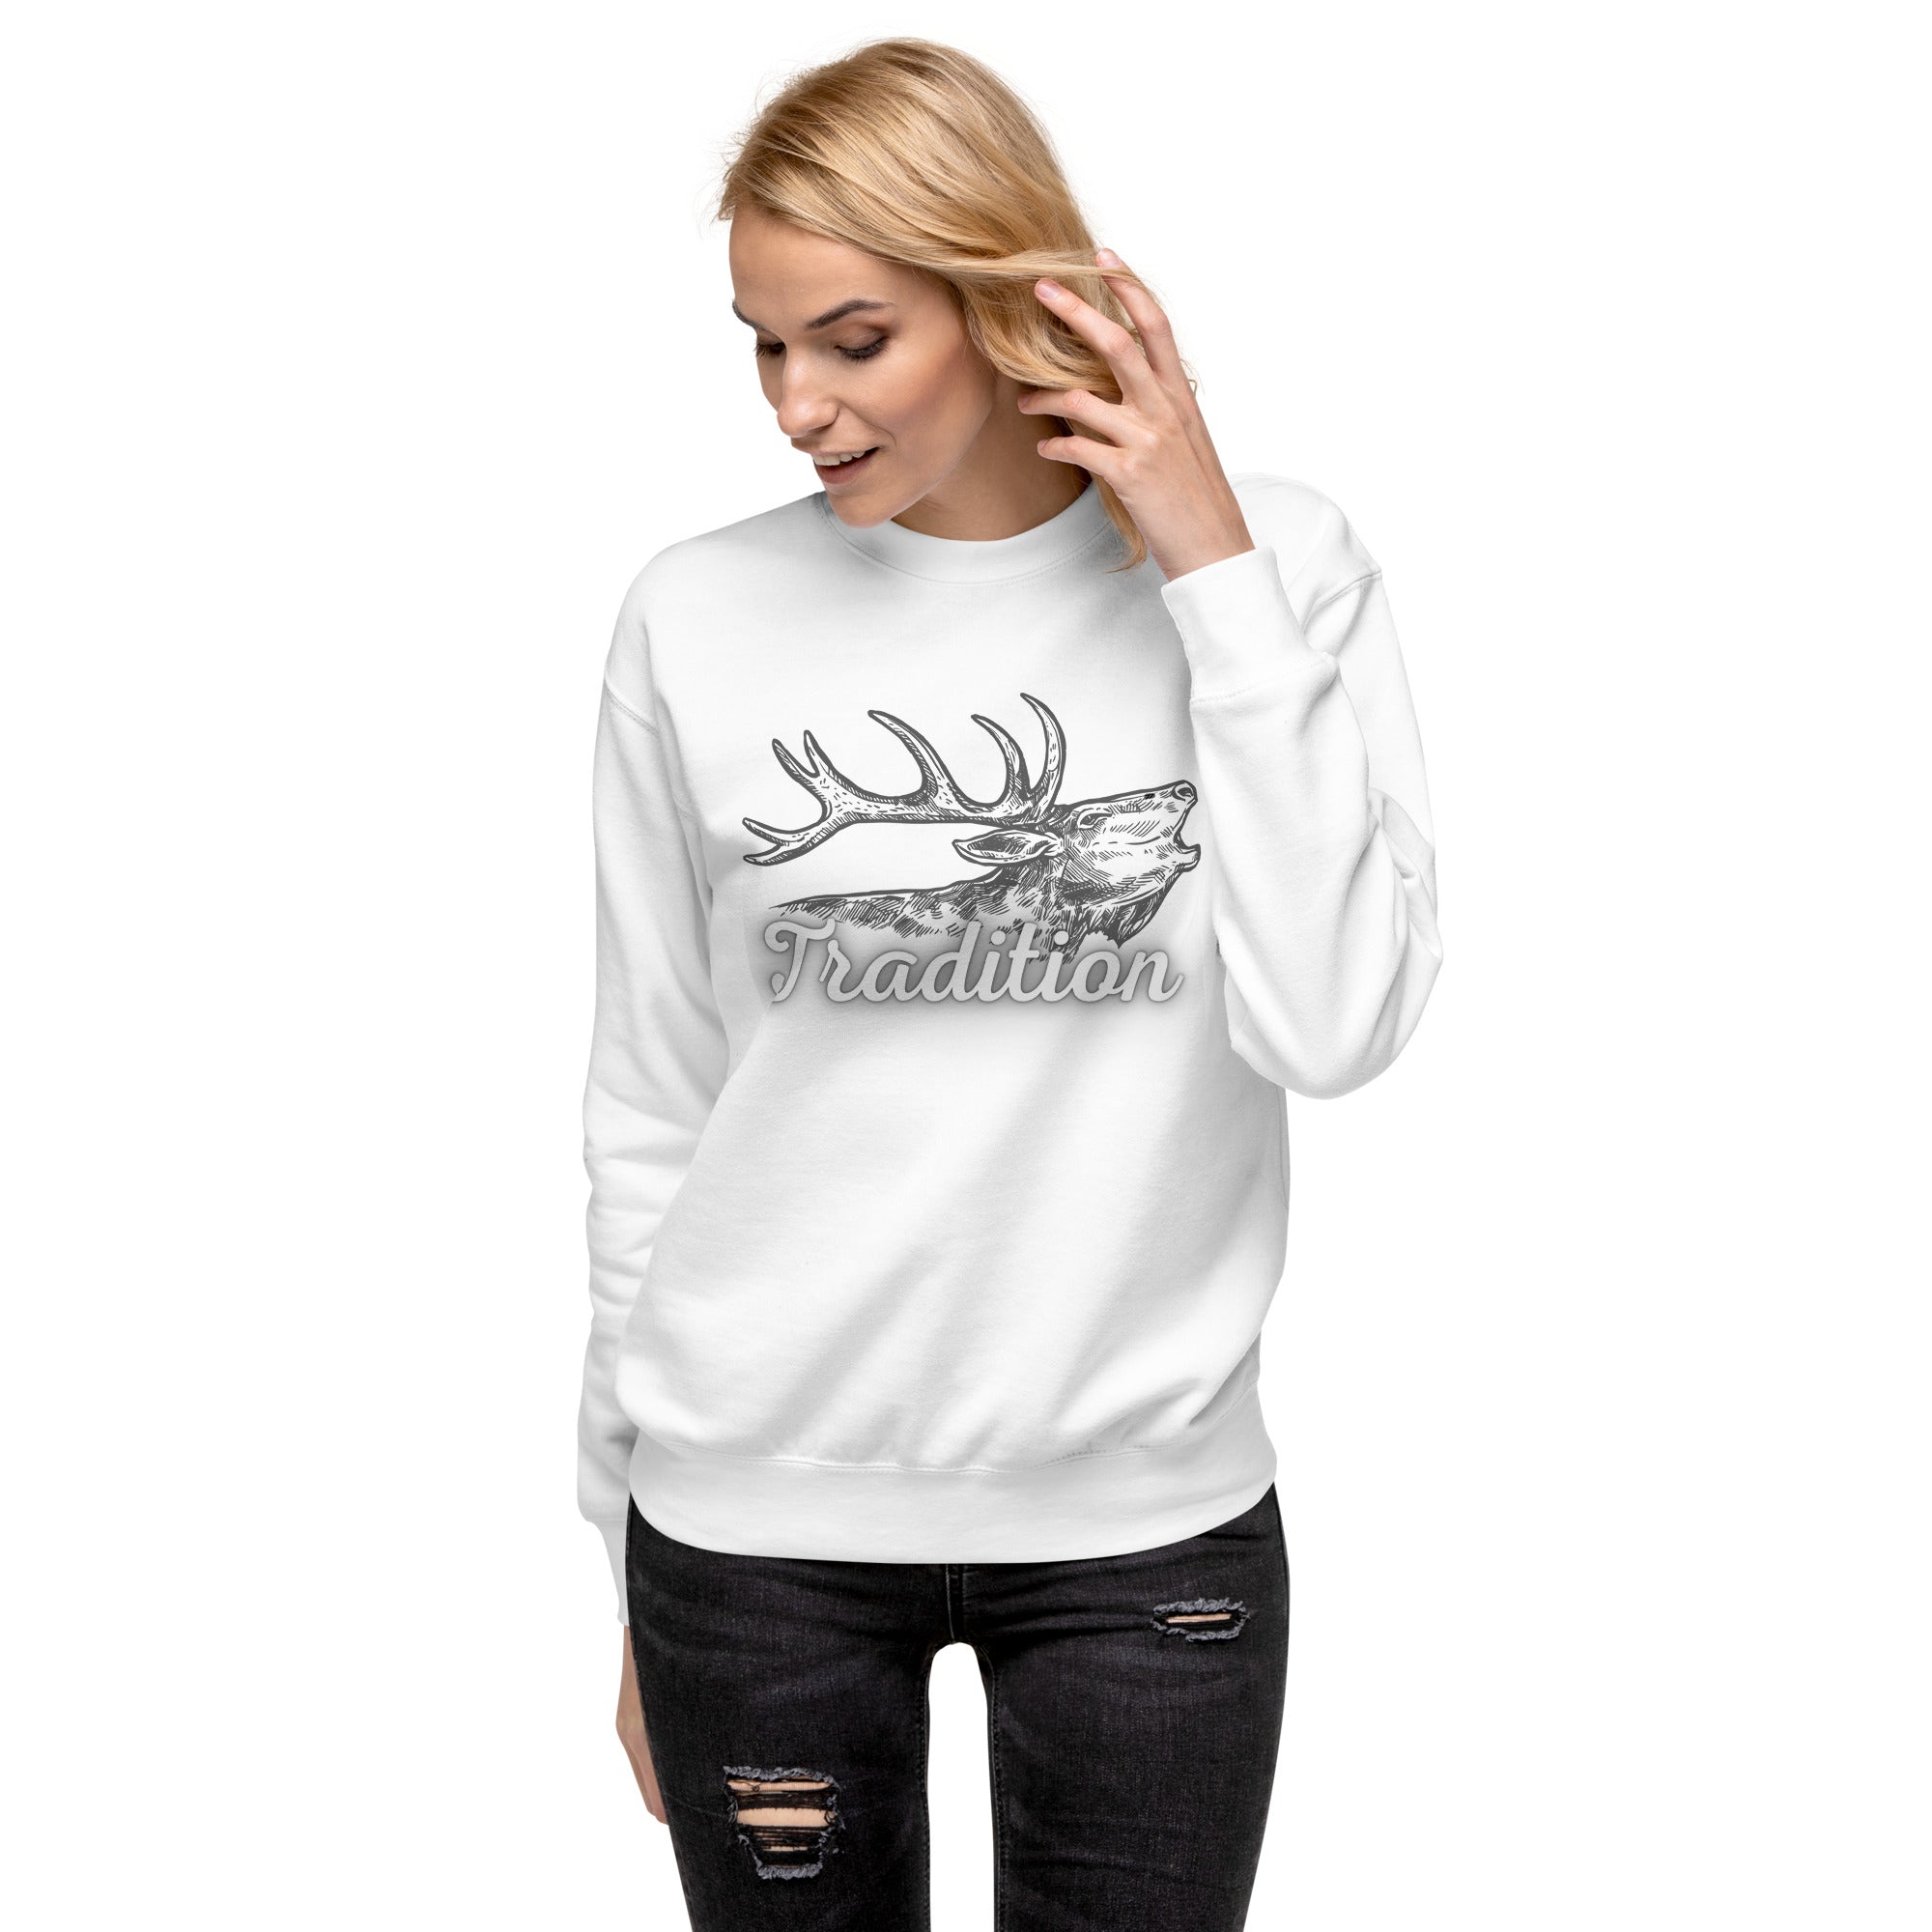 Tradition Women's Premium Sweatshirt